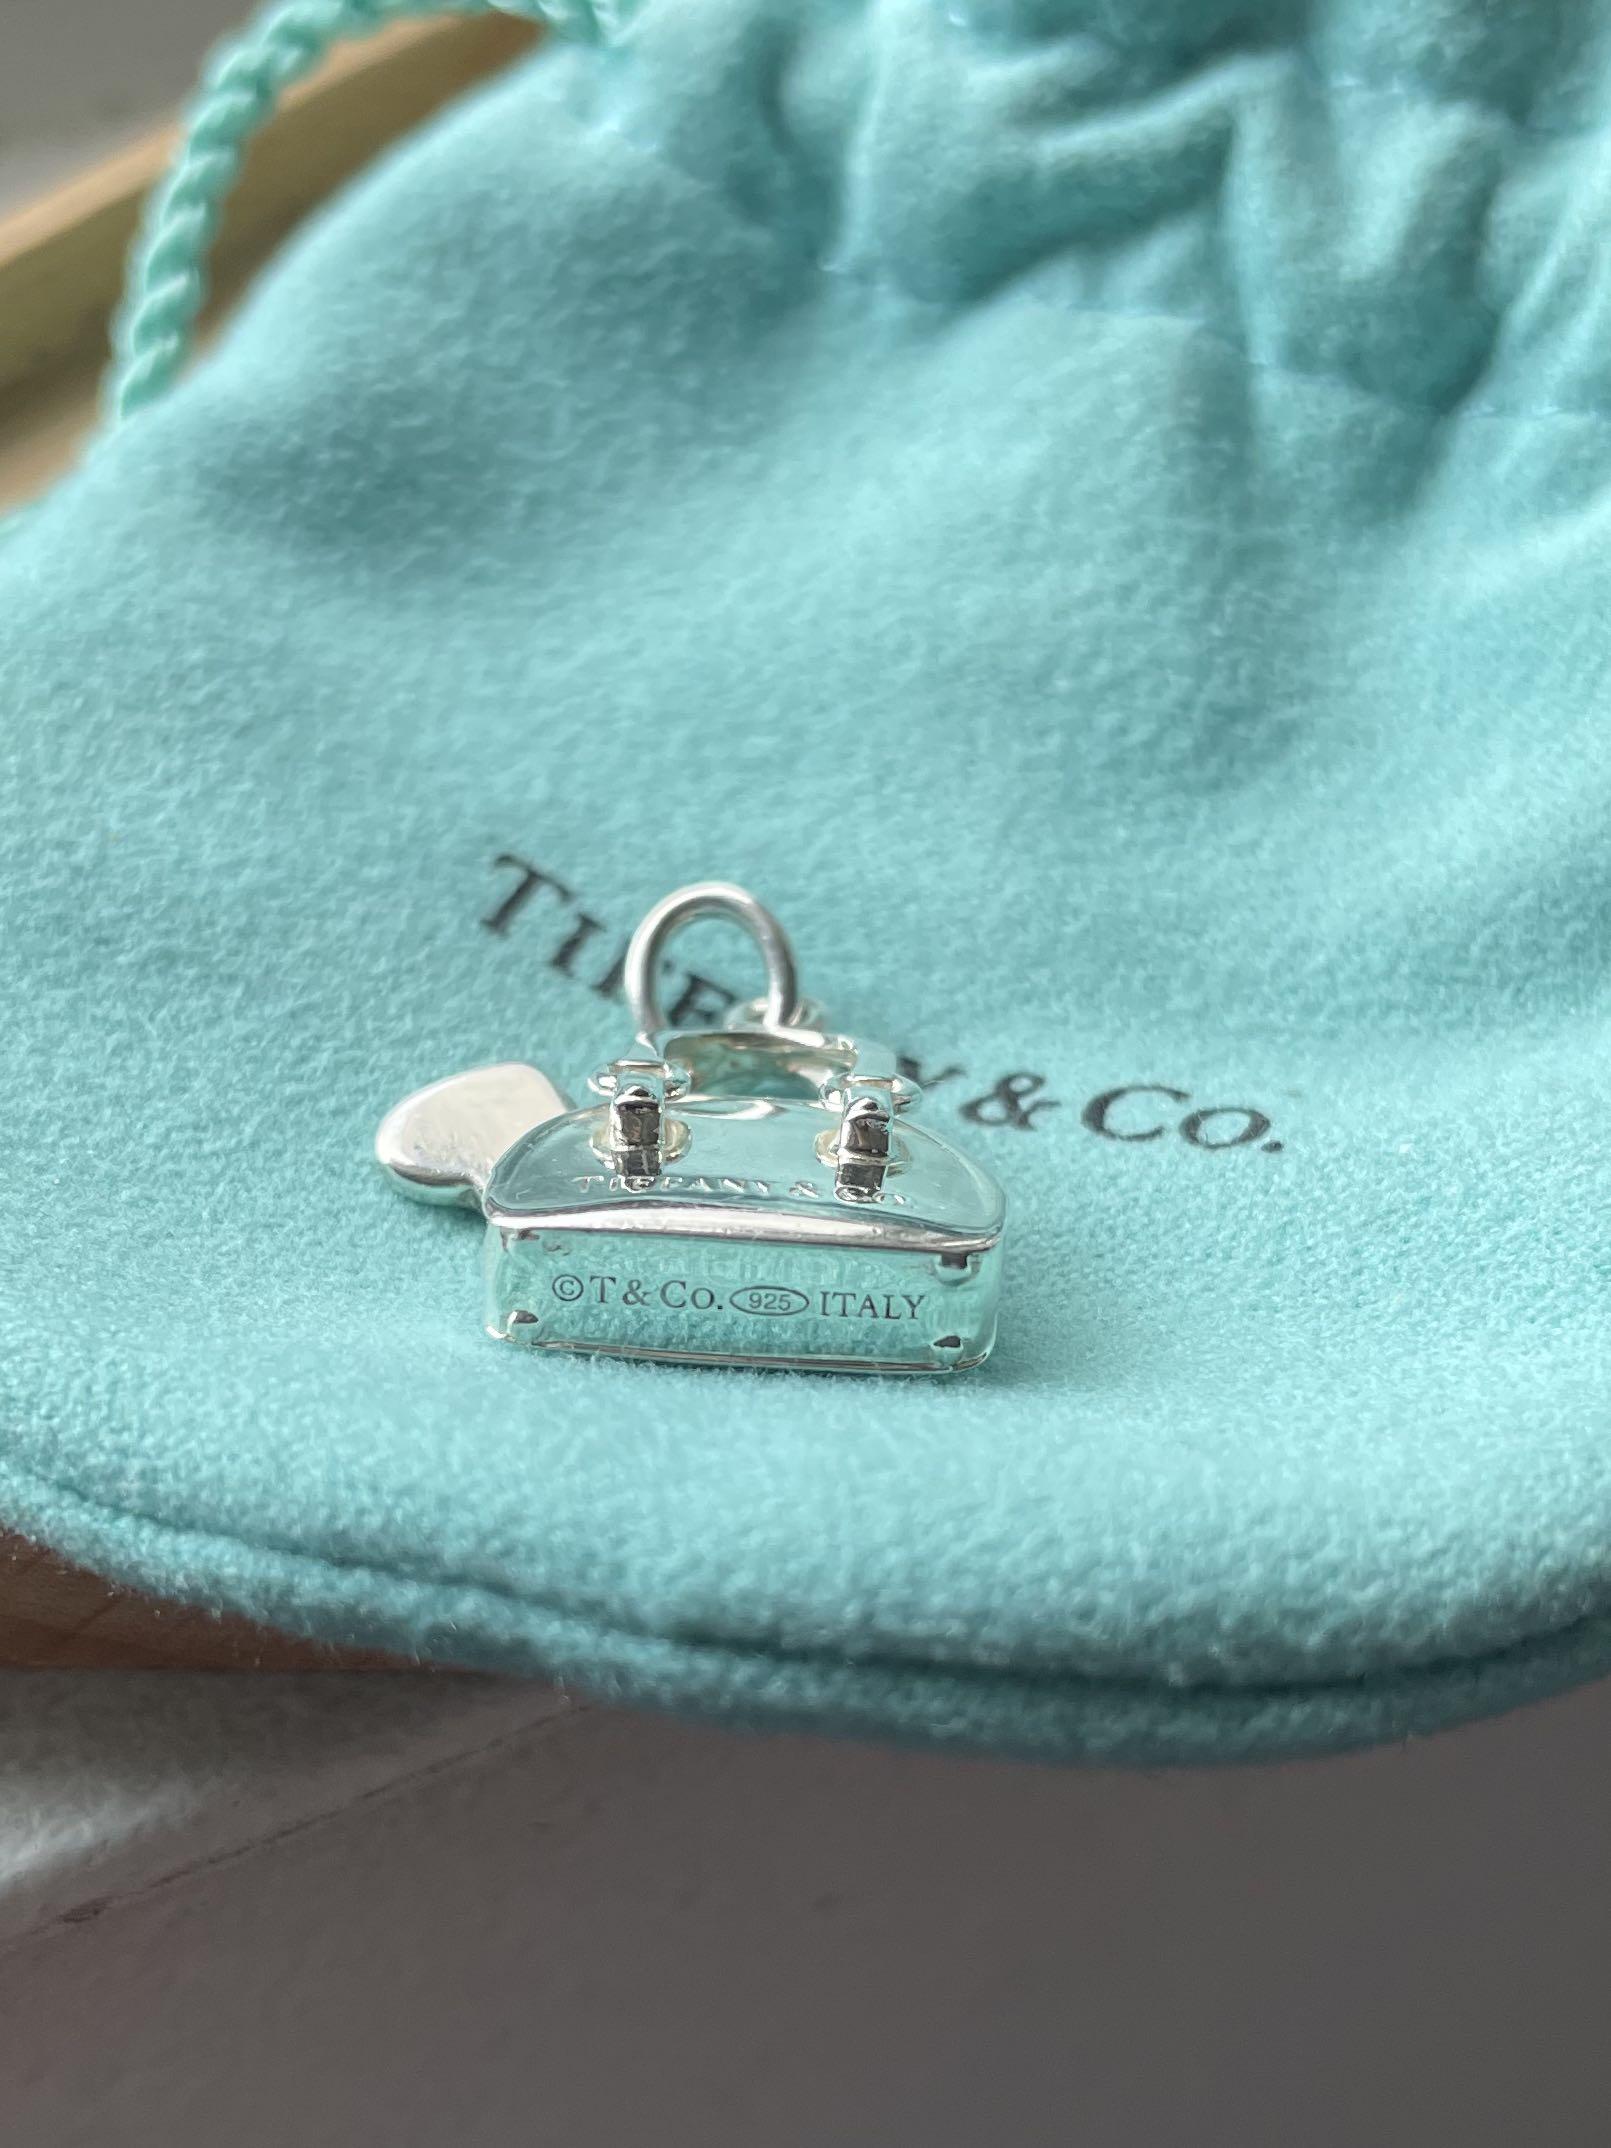 Handbag charm in sterling silver with Tiffany Blue® enamel finish